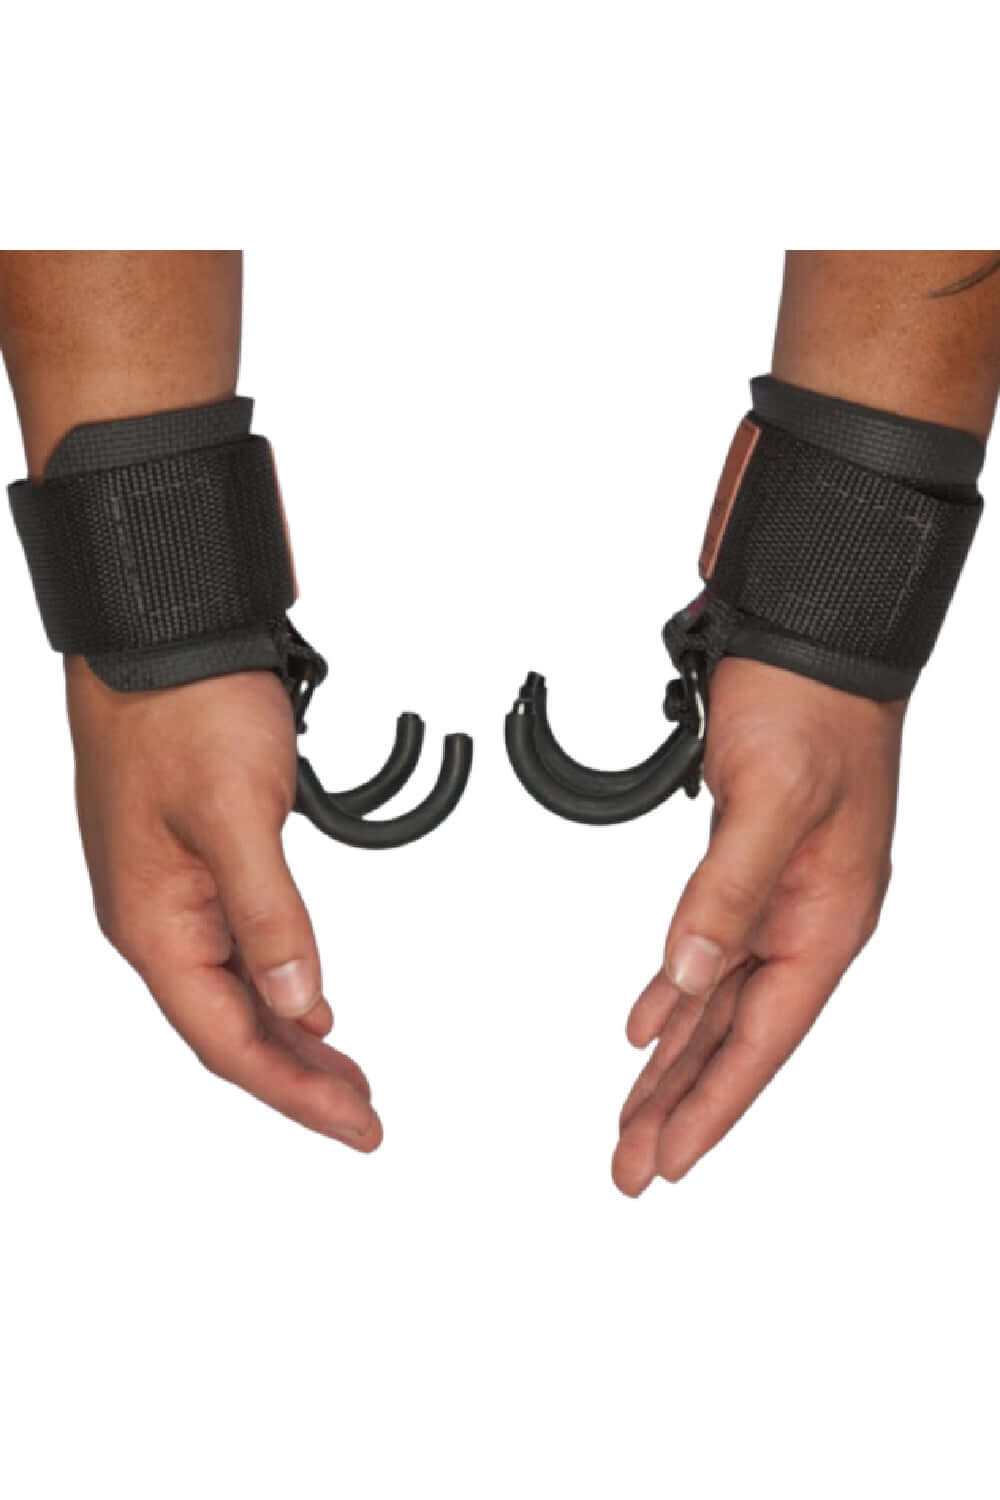 1 Pair Weight Lifting Hooks Hand-Bar Wrist Straps Power Lifting